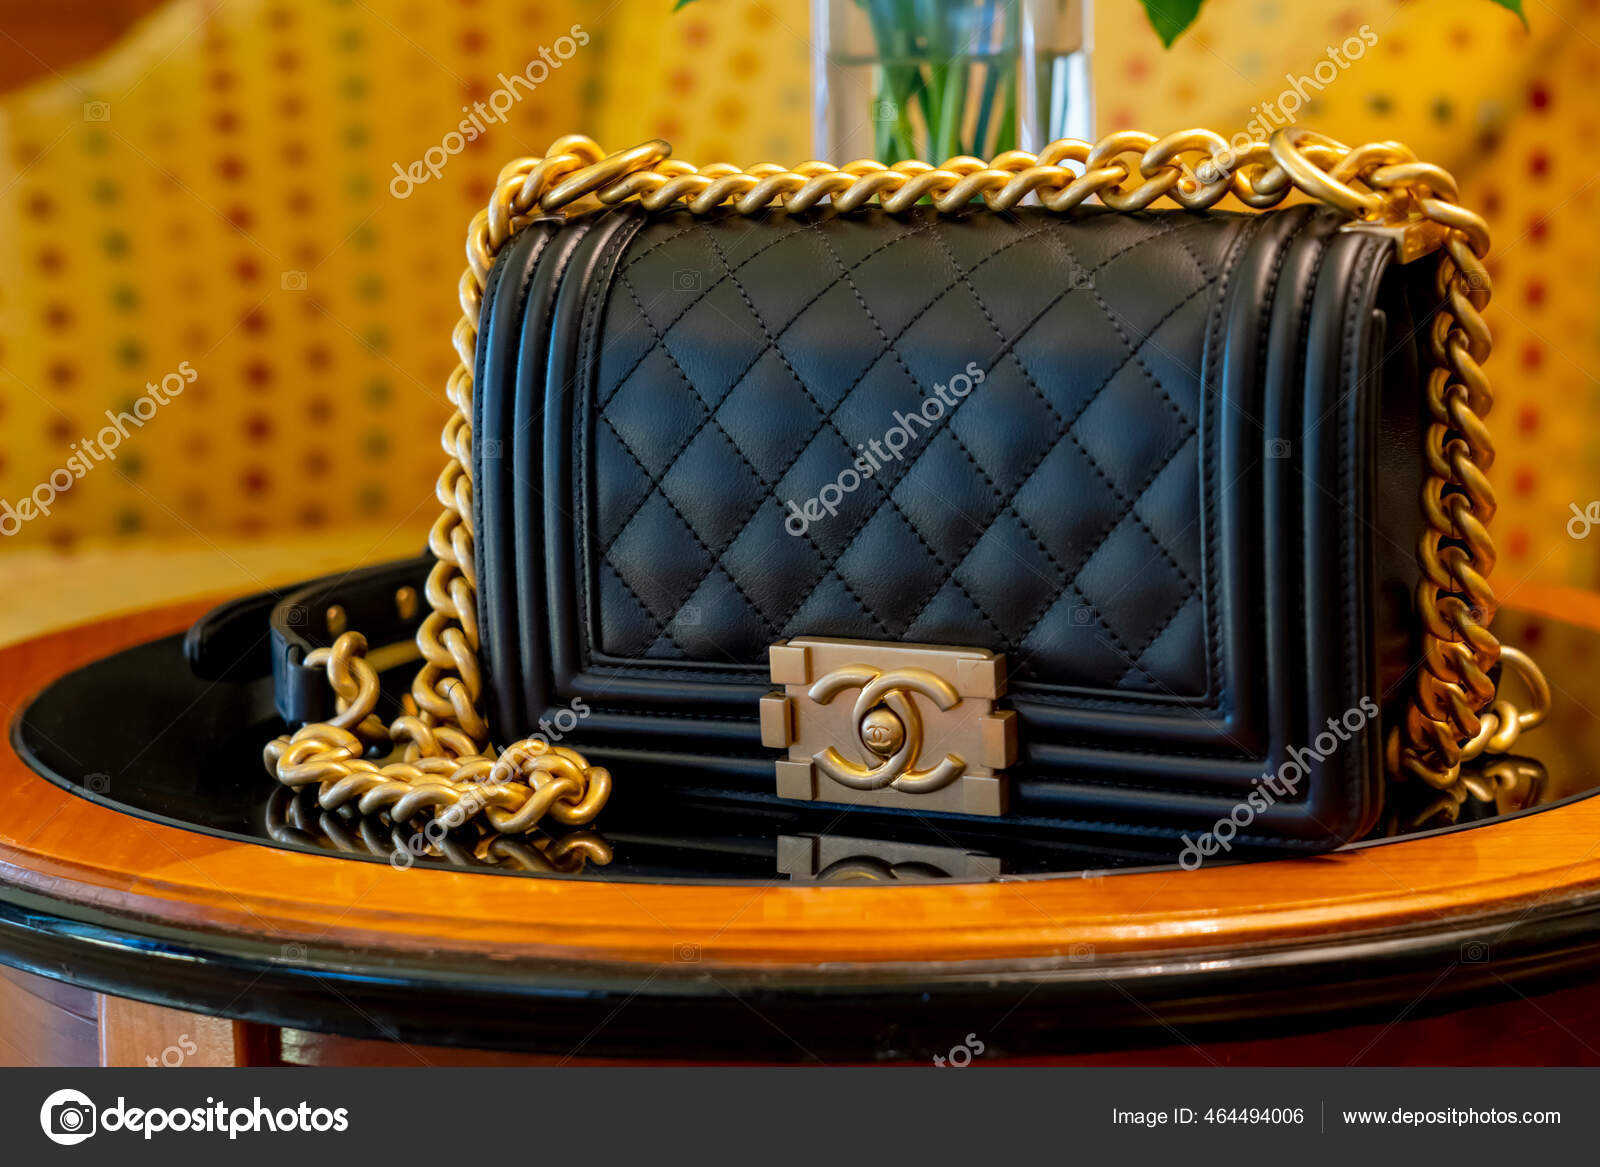 Luxury Handbags in the Shop Stock Photo - Image of luggage